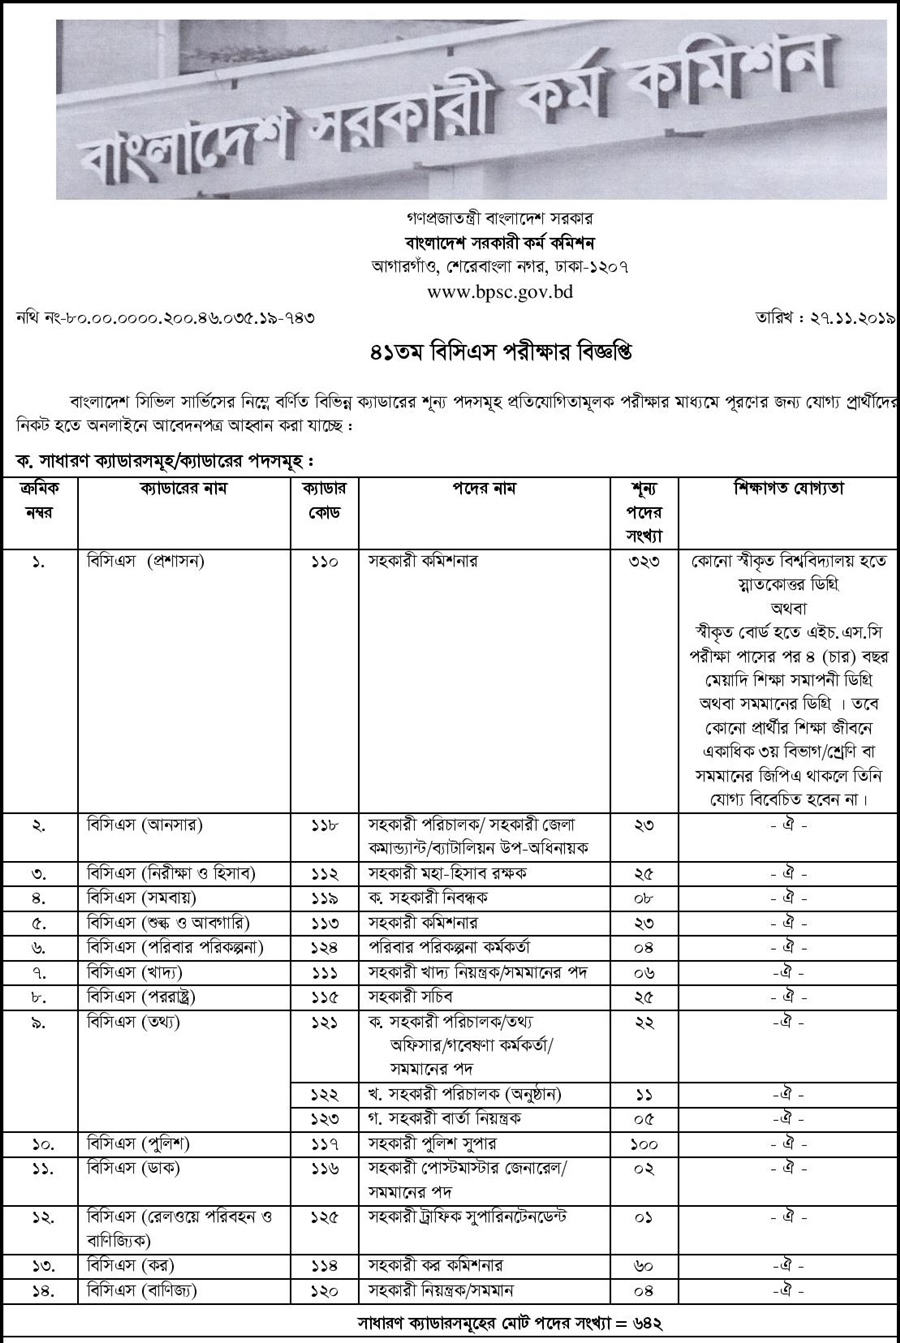 41st Bangladesh Public Service Commission (BPSC) Job Circular 2019